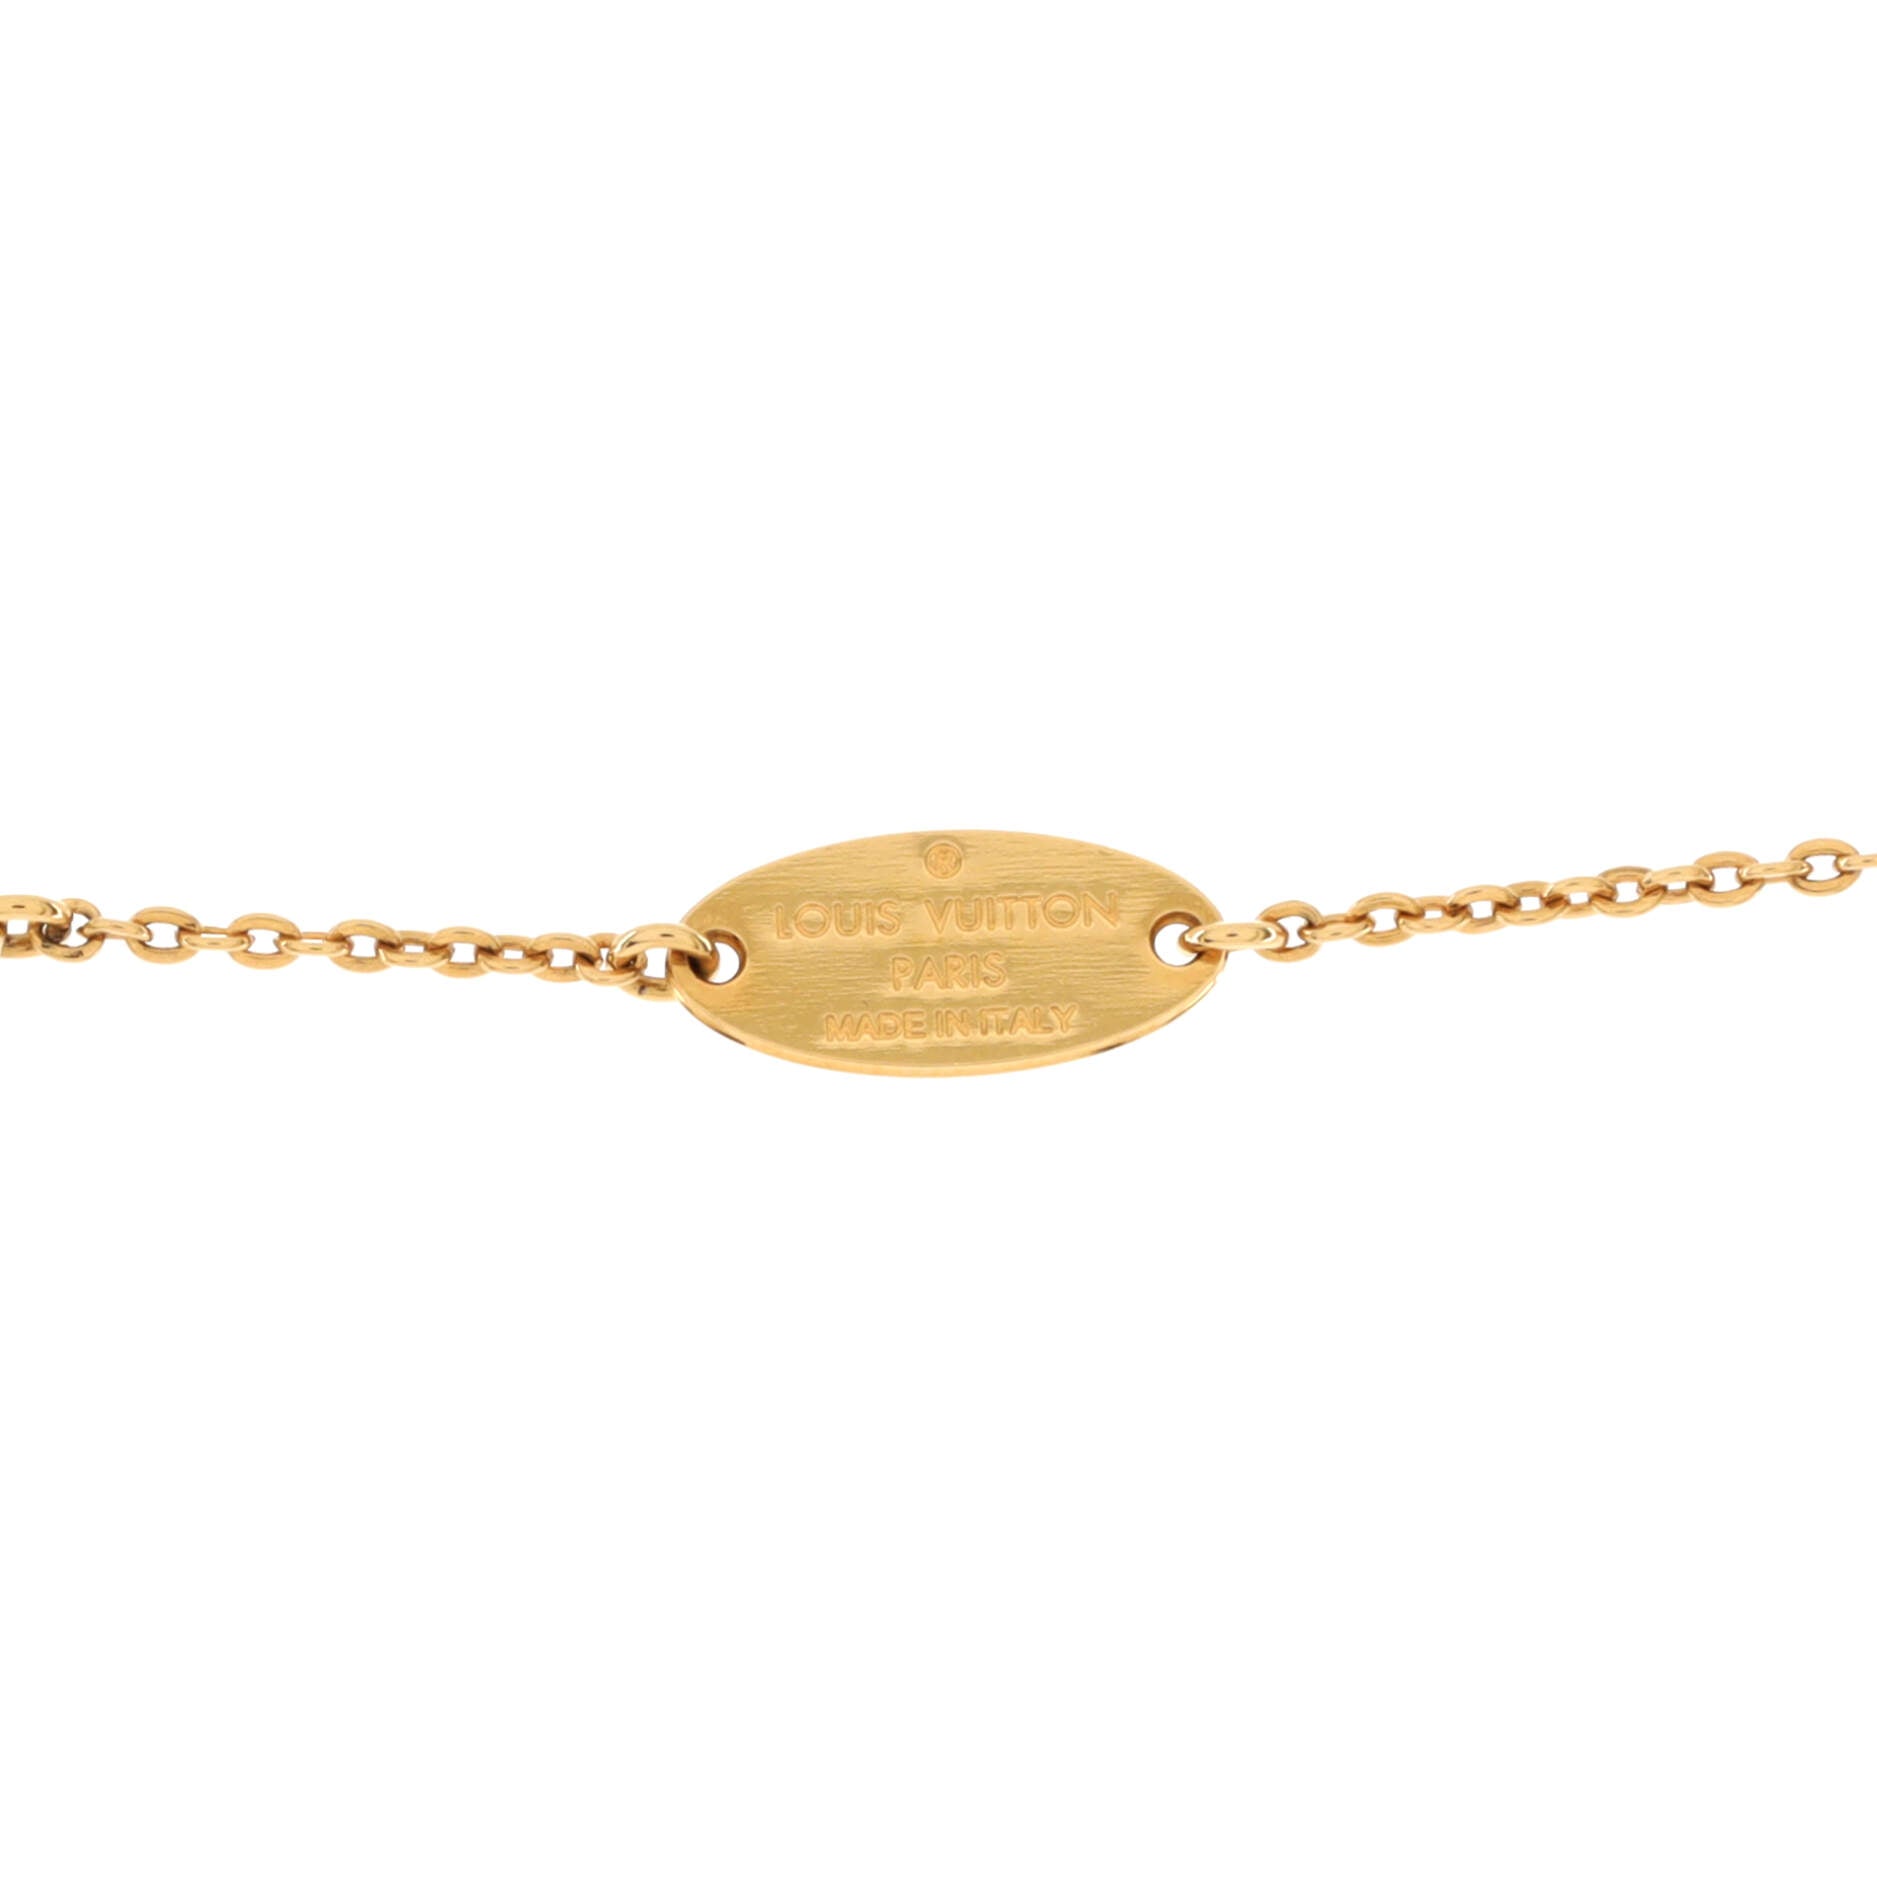 Louis Vuitton, Jewelry, Louis Vuitton Color Blossom Bb Sun Pendant  Necklace 8k Rose Gold With Malachite